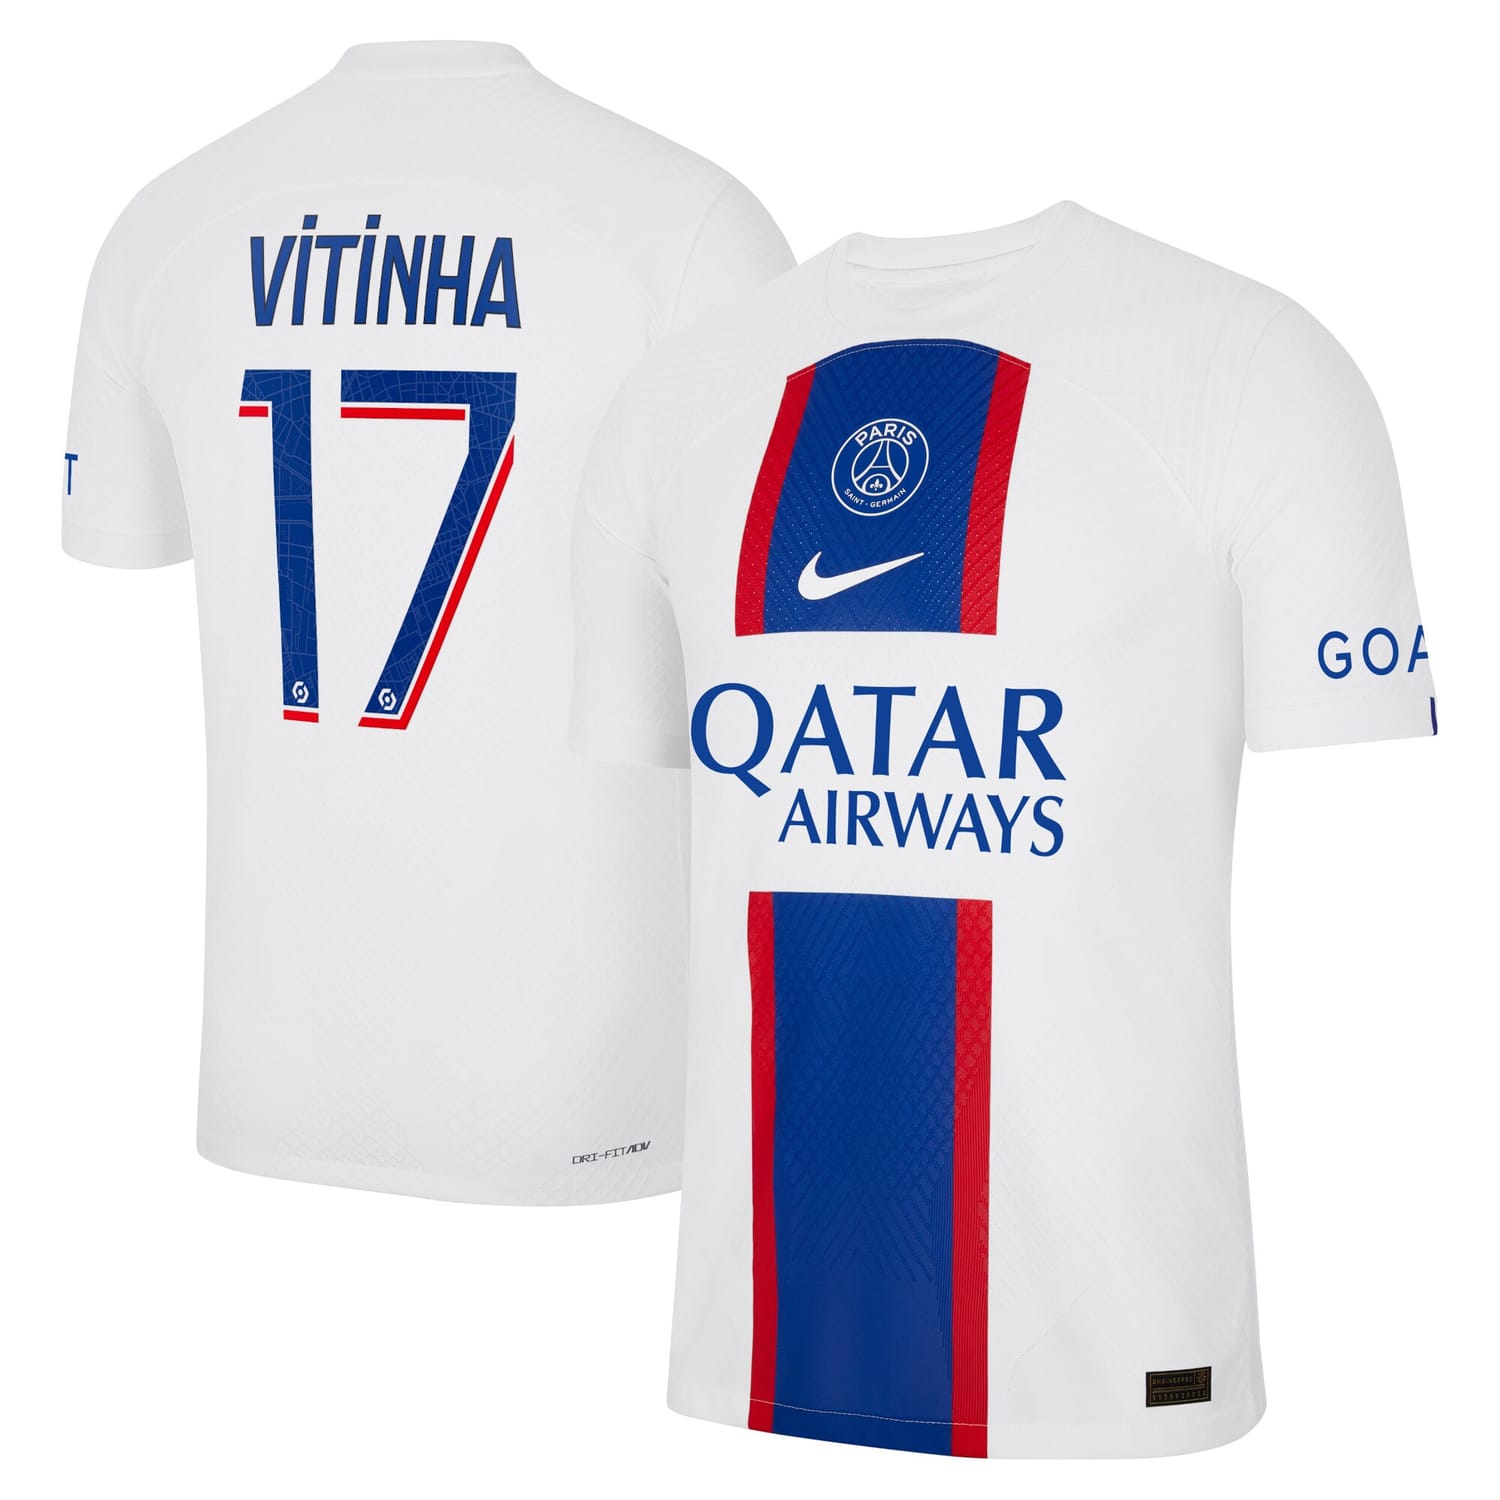 Ligue 1 Paris Saint-Germain Third Authentic Jersey Shirt 2022-23 player Vitinha 17 printing for Men